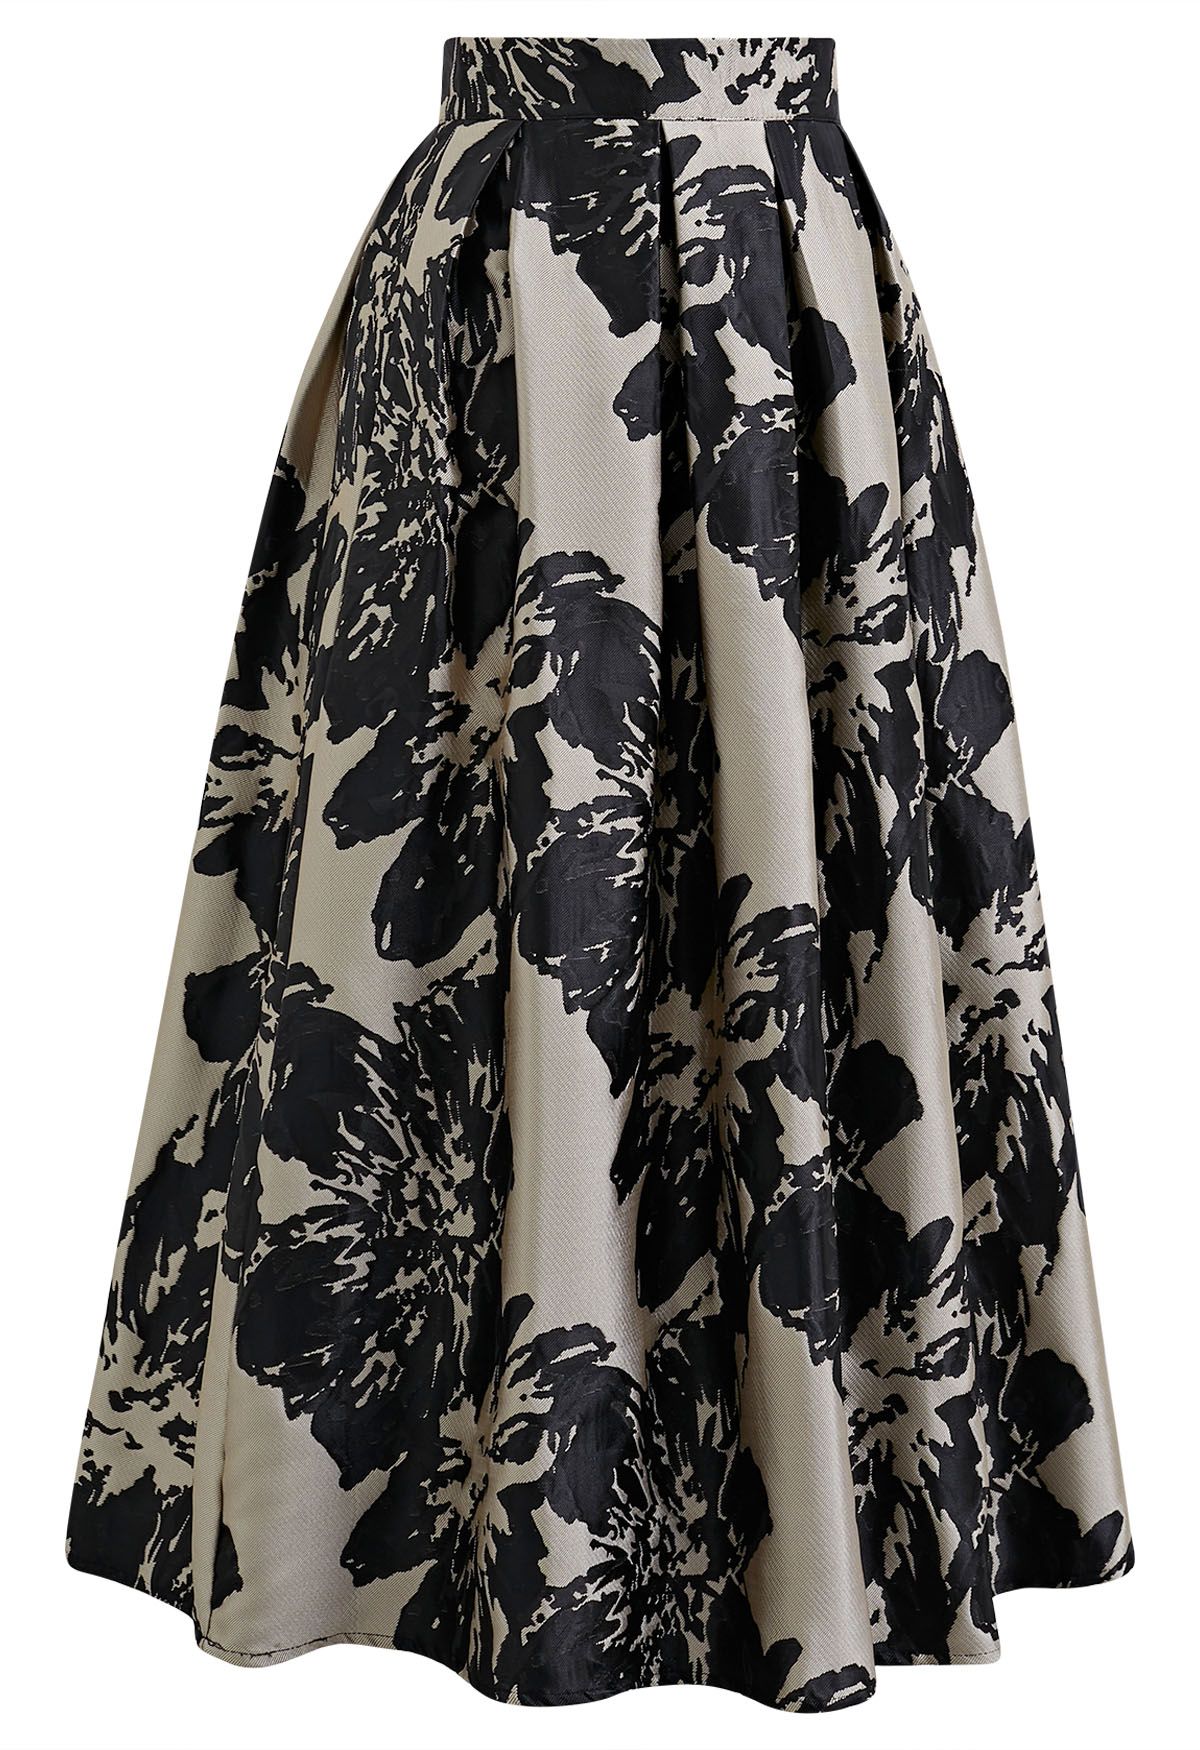 Llamativa falda midi plisada de jacquard floral